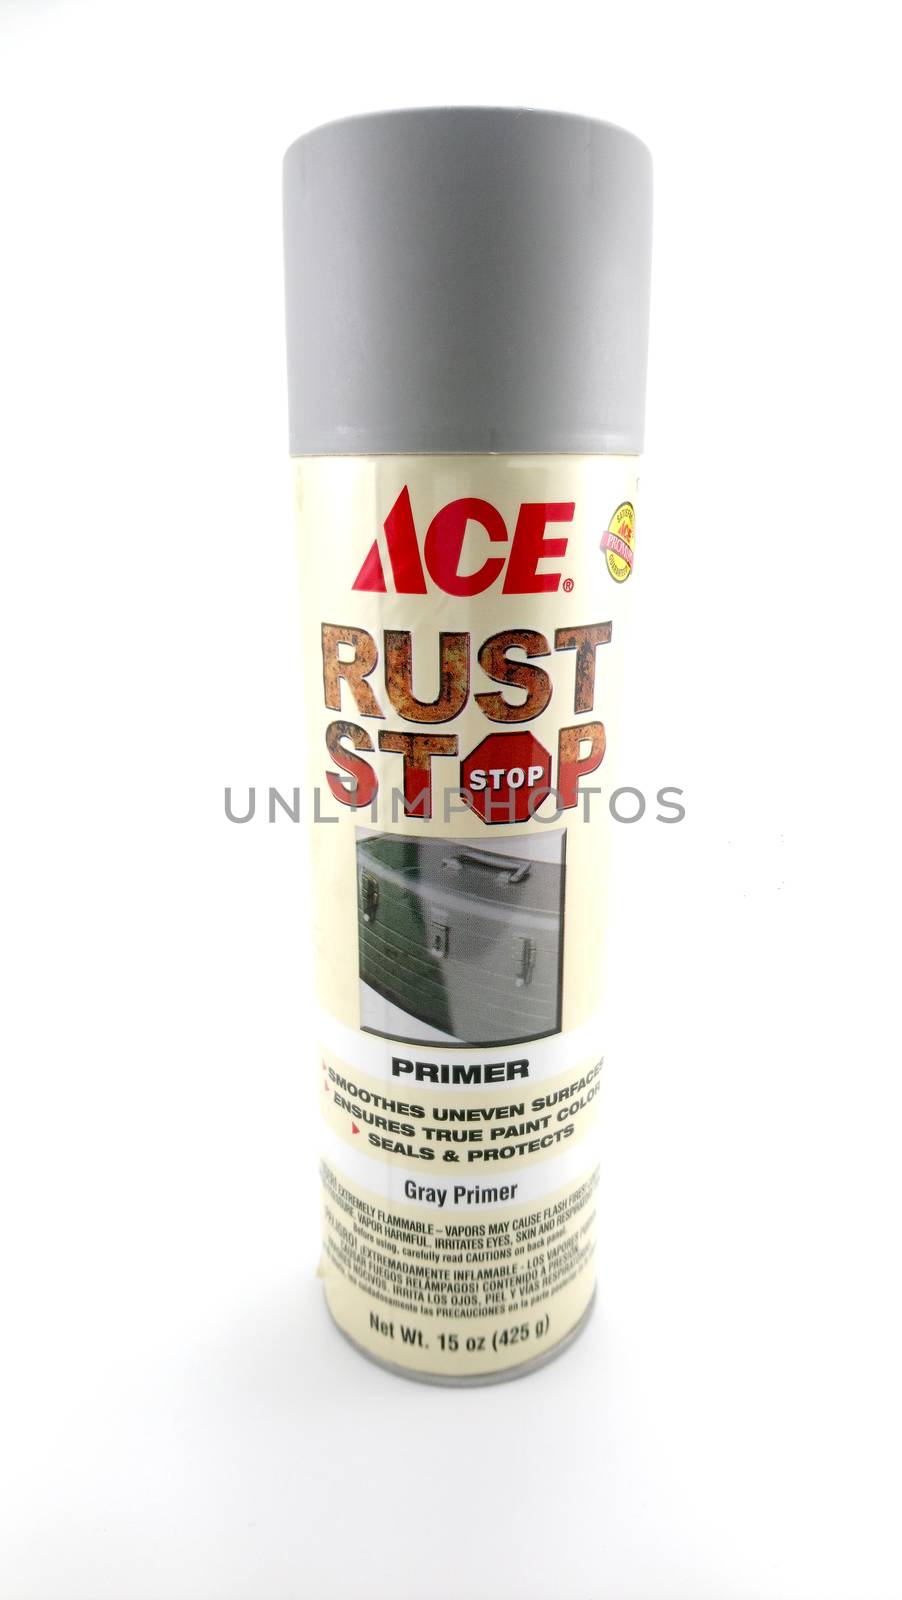 Ace hardware rust stop gray primer spray can in Manila, Philippi by imwaltersy